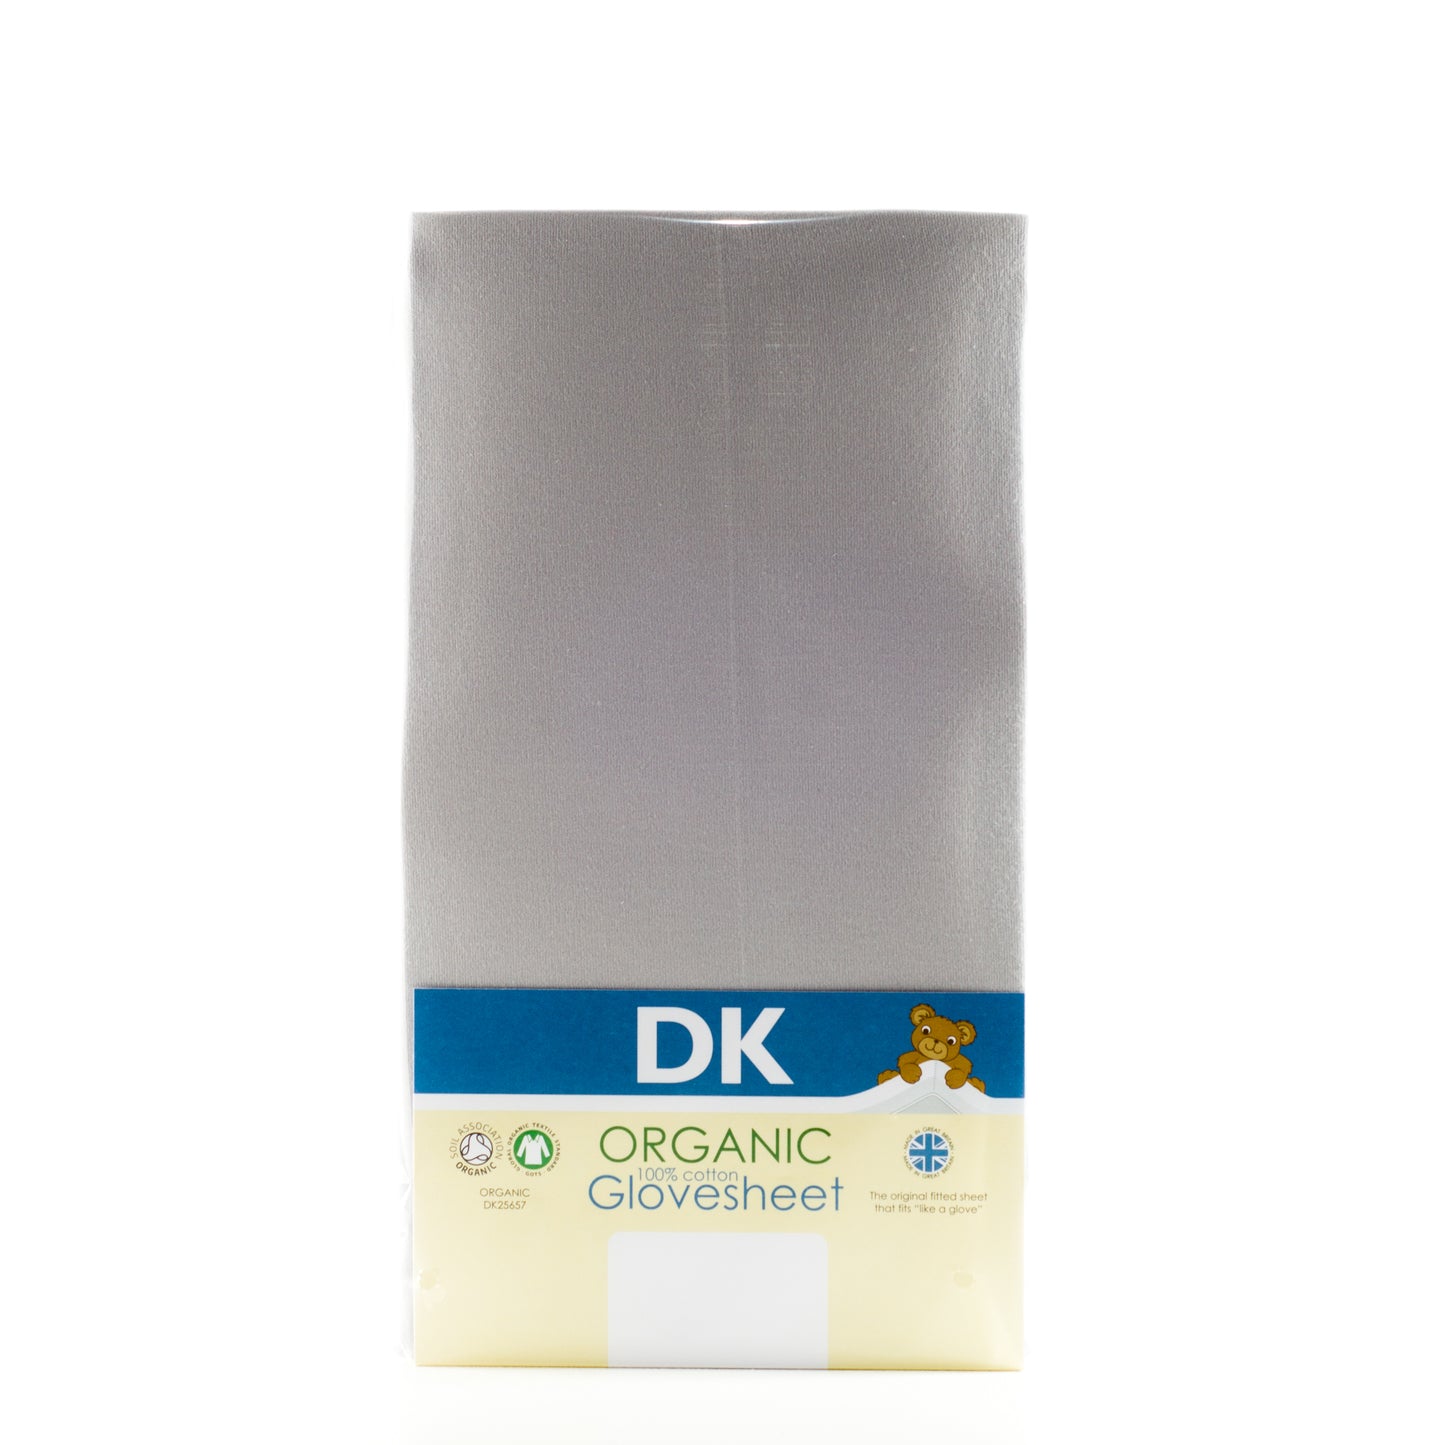 DK Organic Glovesheet-Cotbed